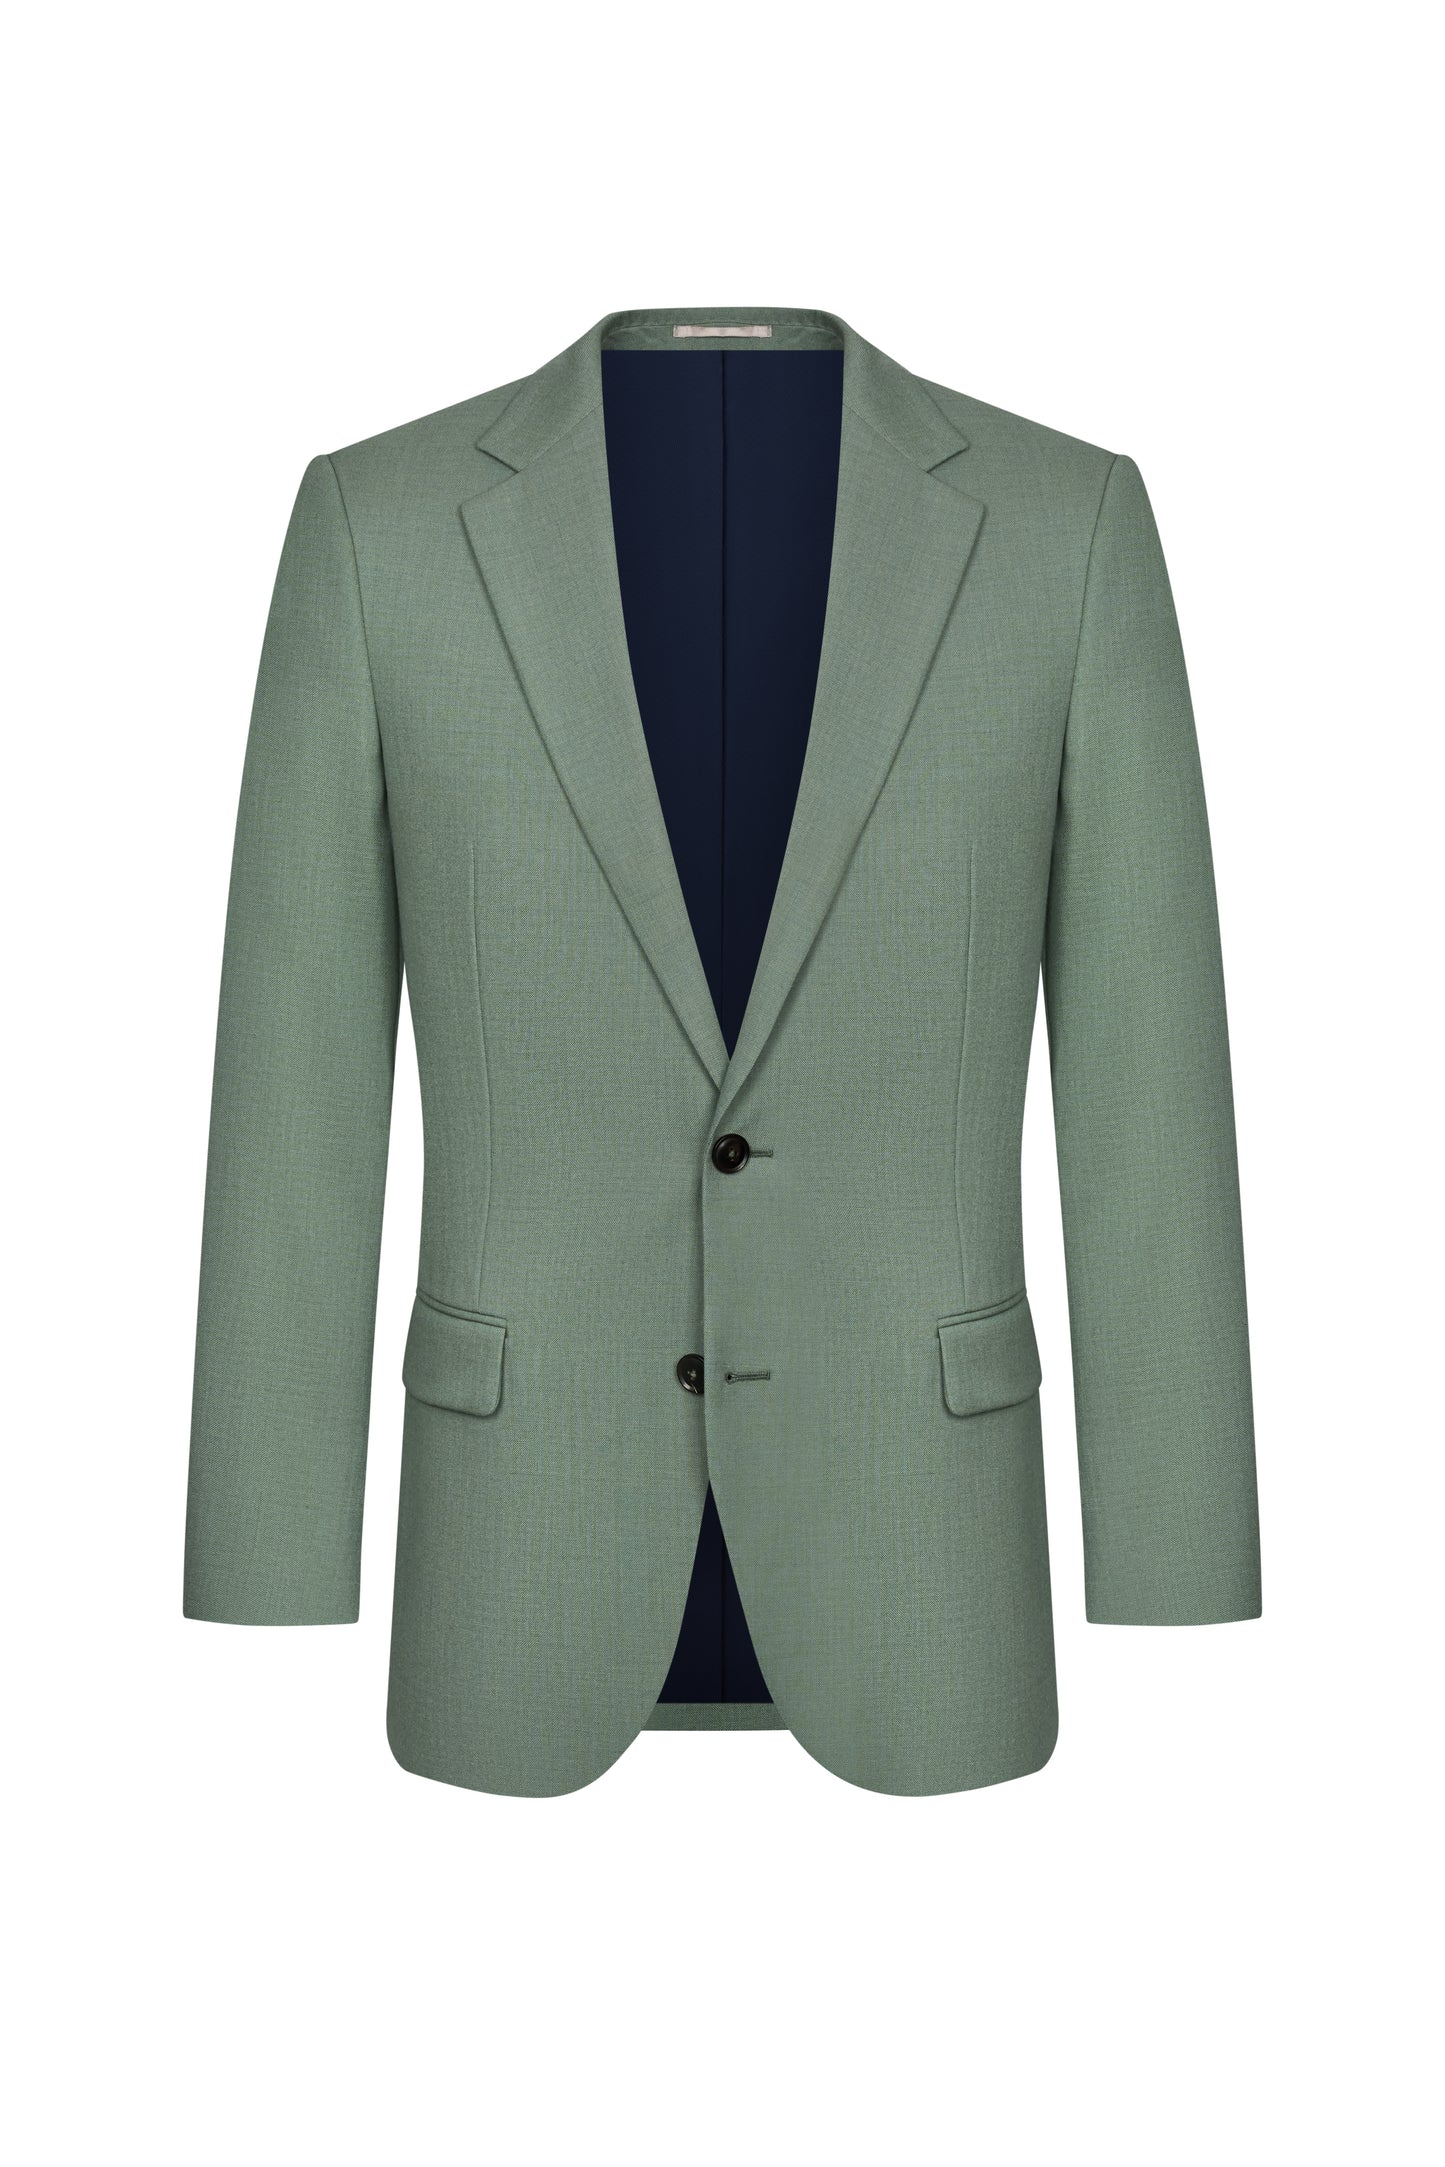 Seafoam Green Hopsack Custom Suit